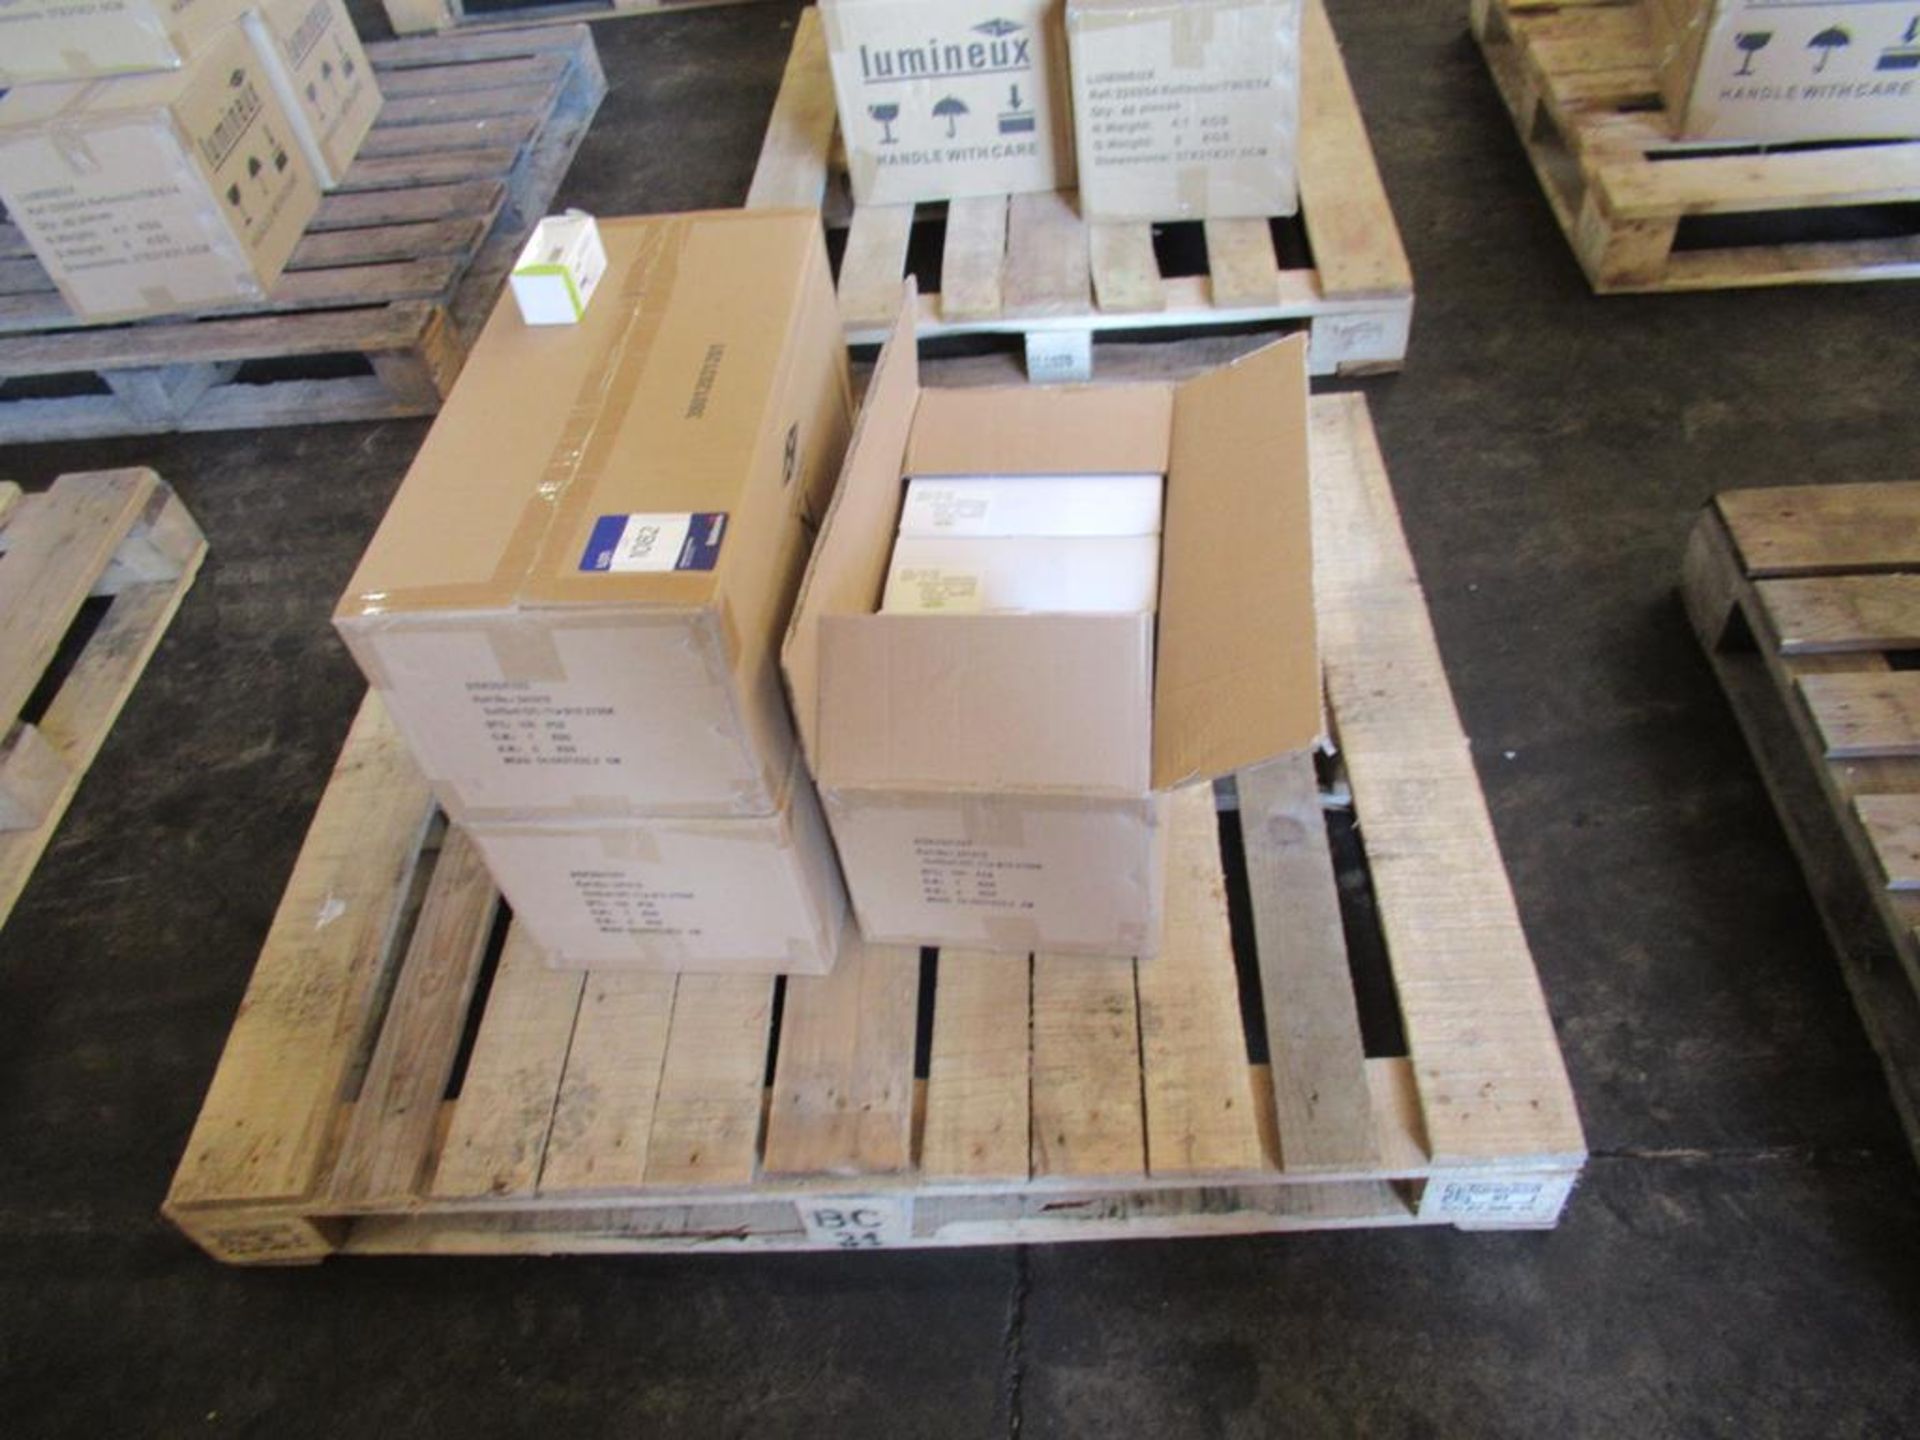 3x boxes of Lumineux Golf Ball CFL 11W B15 2700K Warm White Bulbs (100pcs per box)